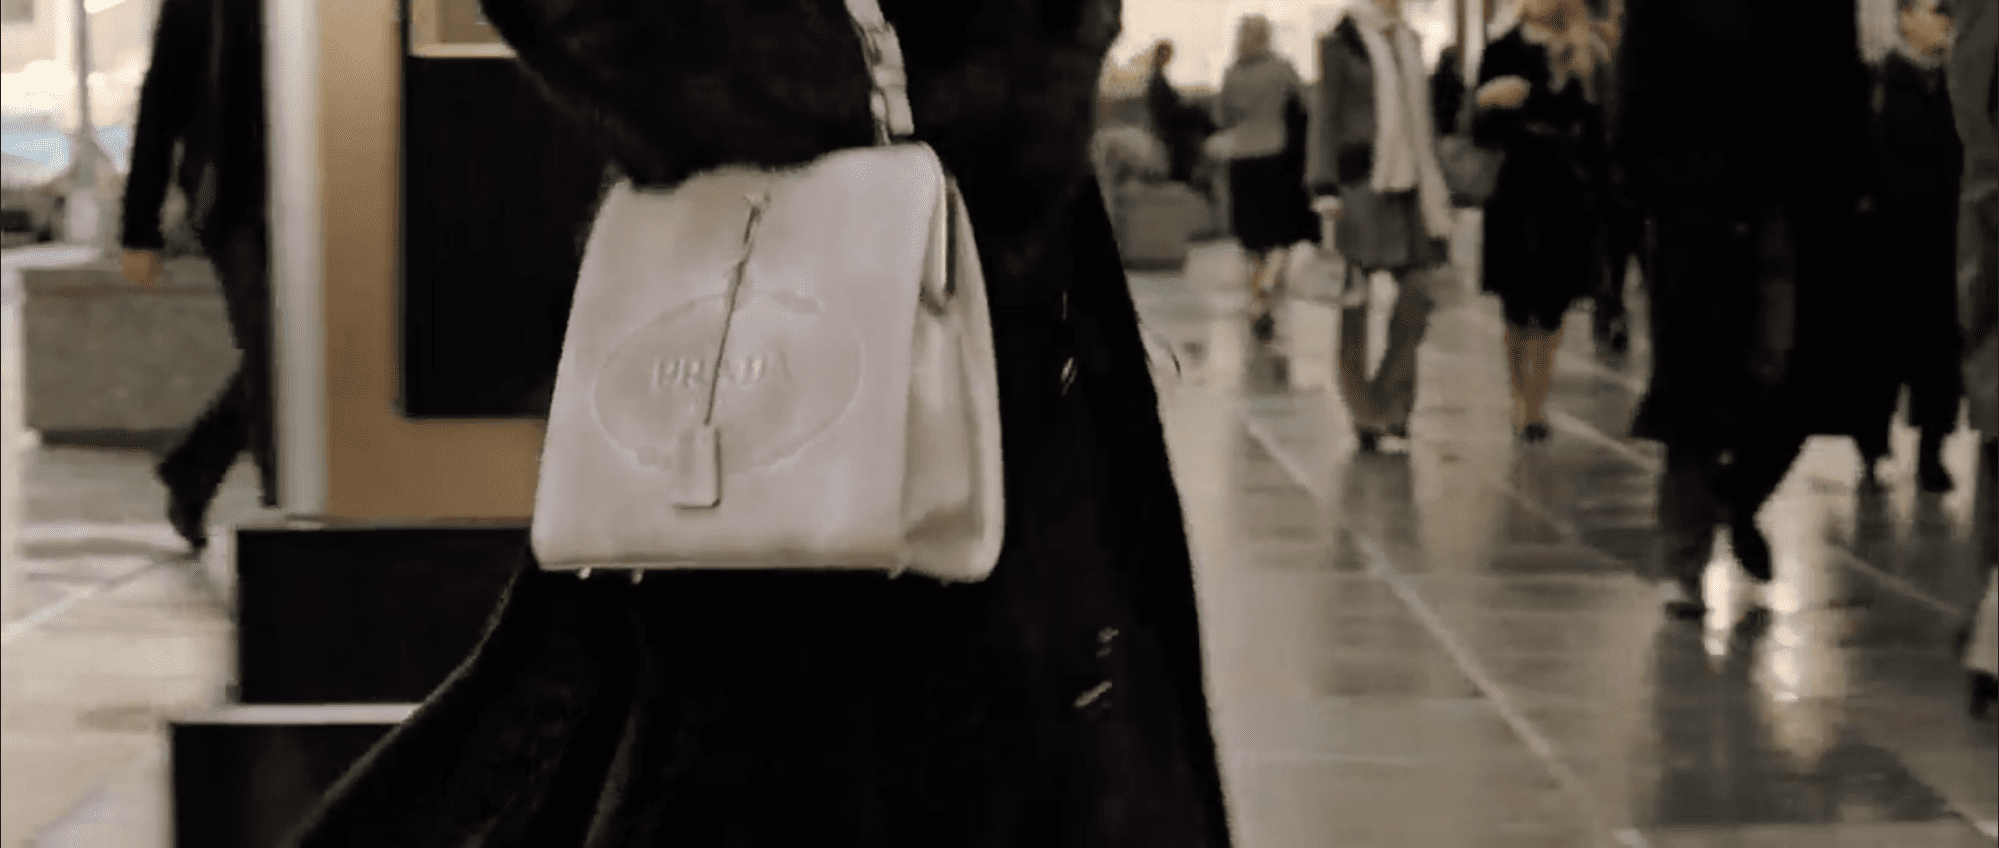 Prada handbag as product placement